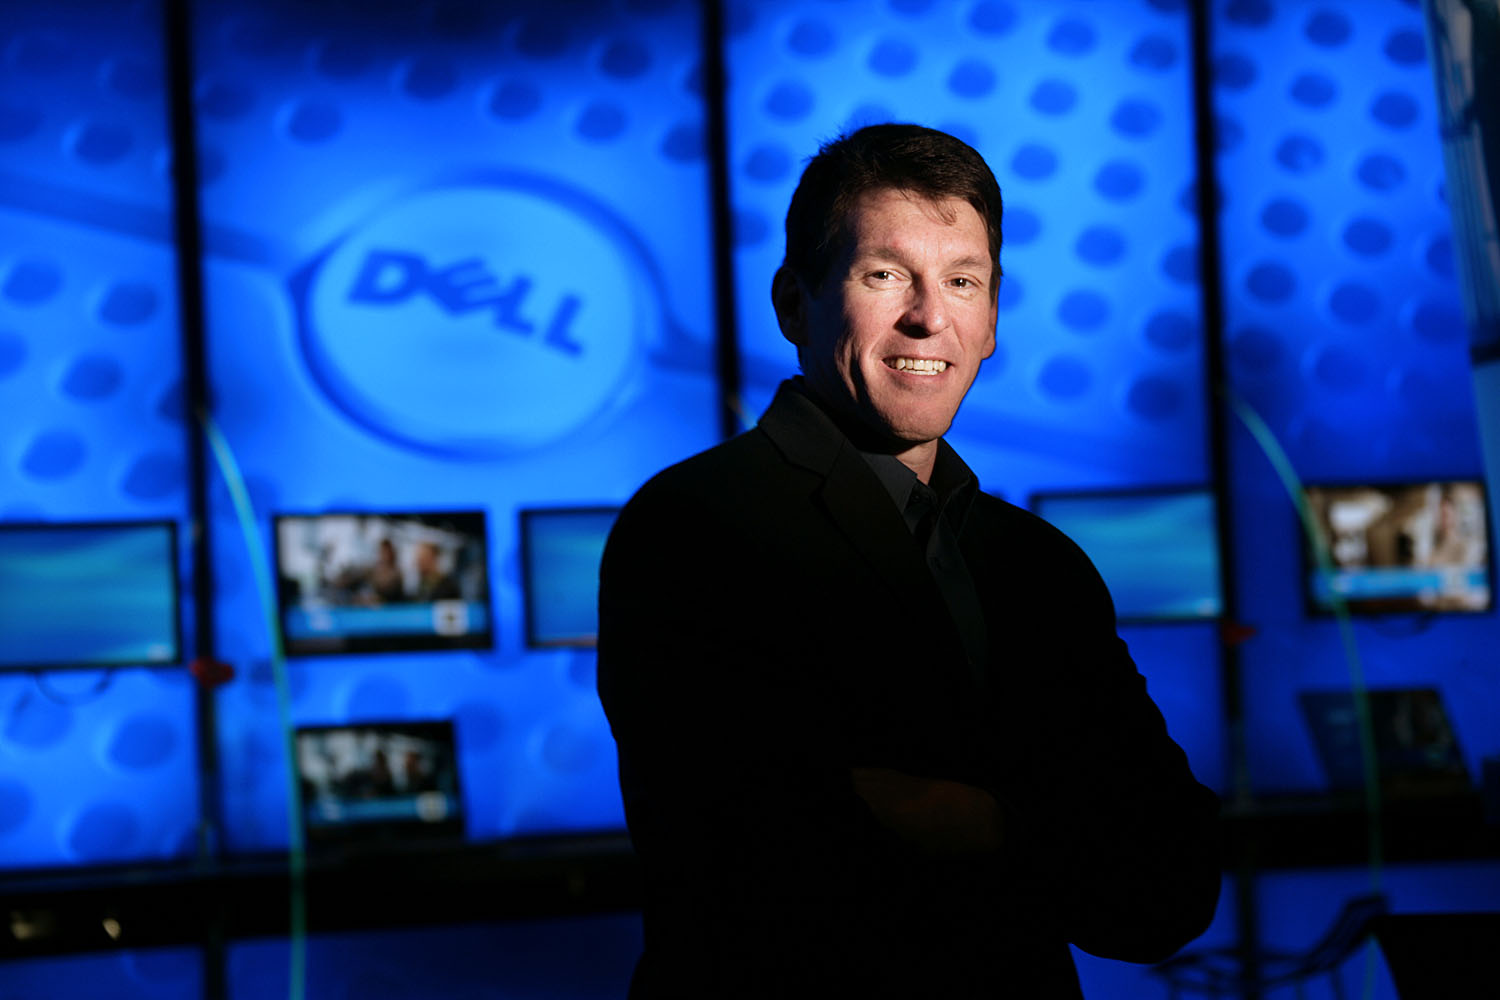   Greg Davis  | VP, Dell Inc. 